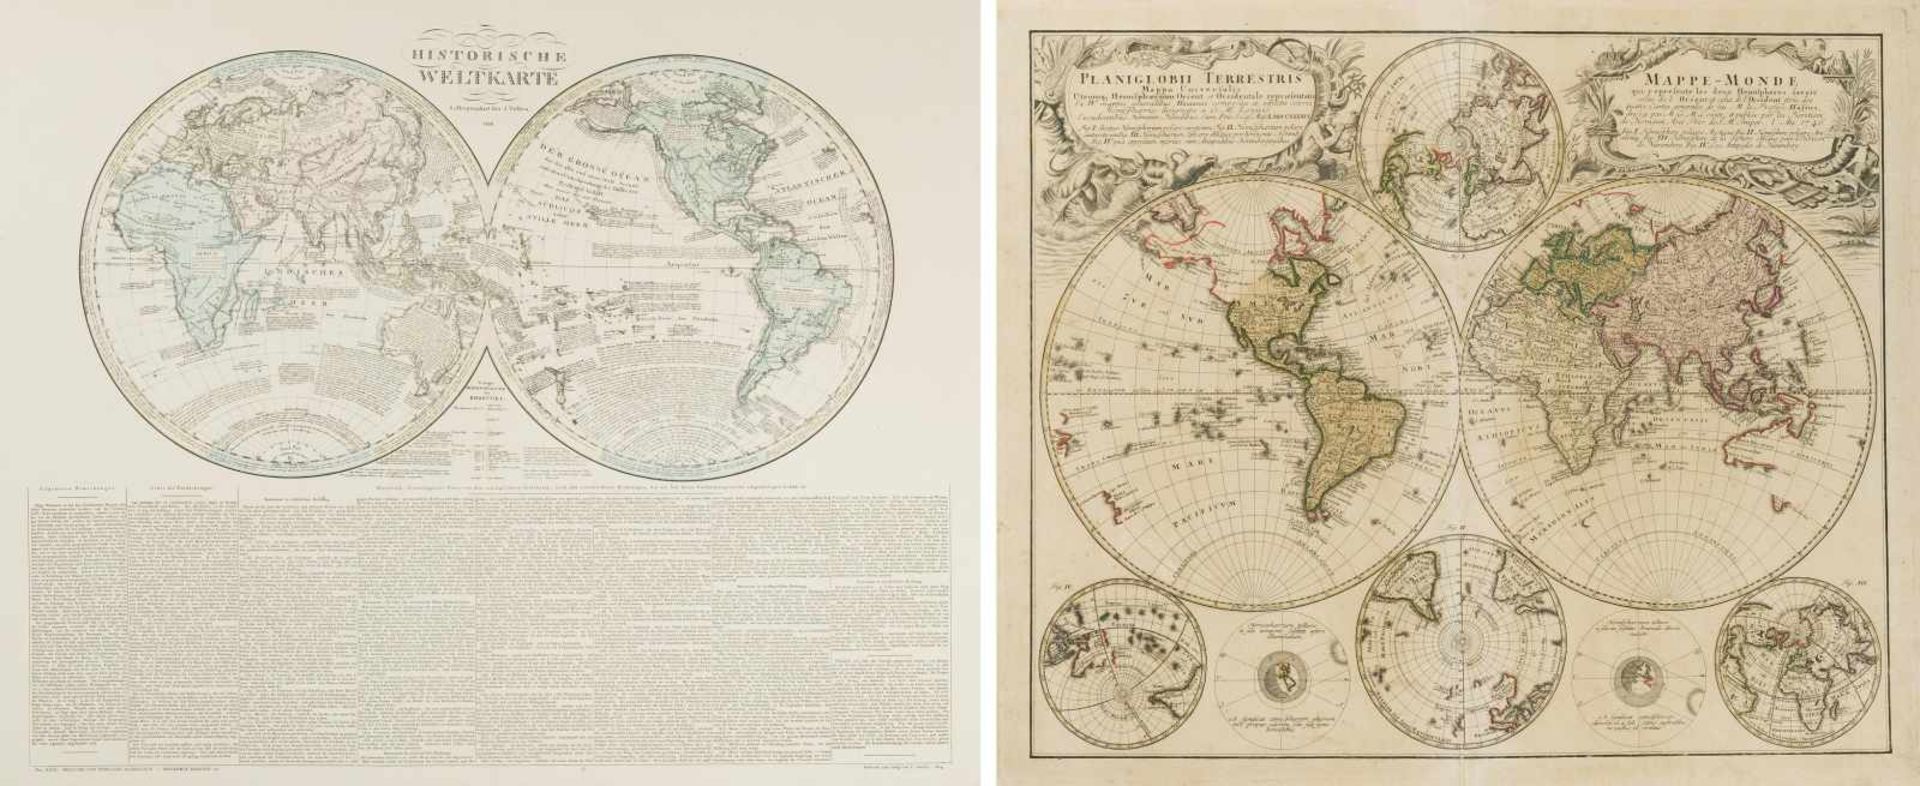 Weltkarte "PLANIGLOBII TERRESTRIS Mappa Universalis Utrumq' Hemisphaerium Orient et Occidentale